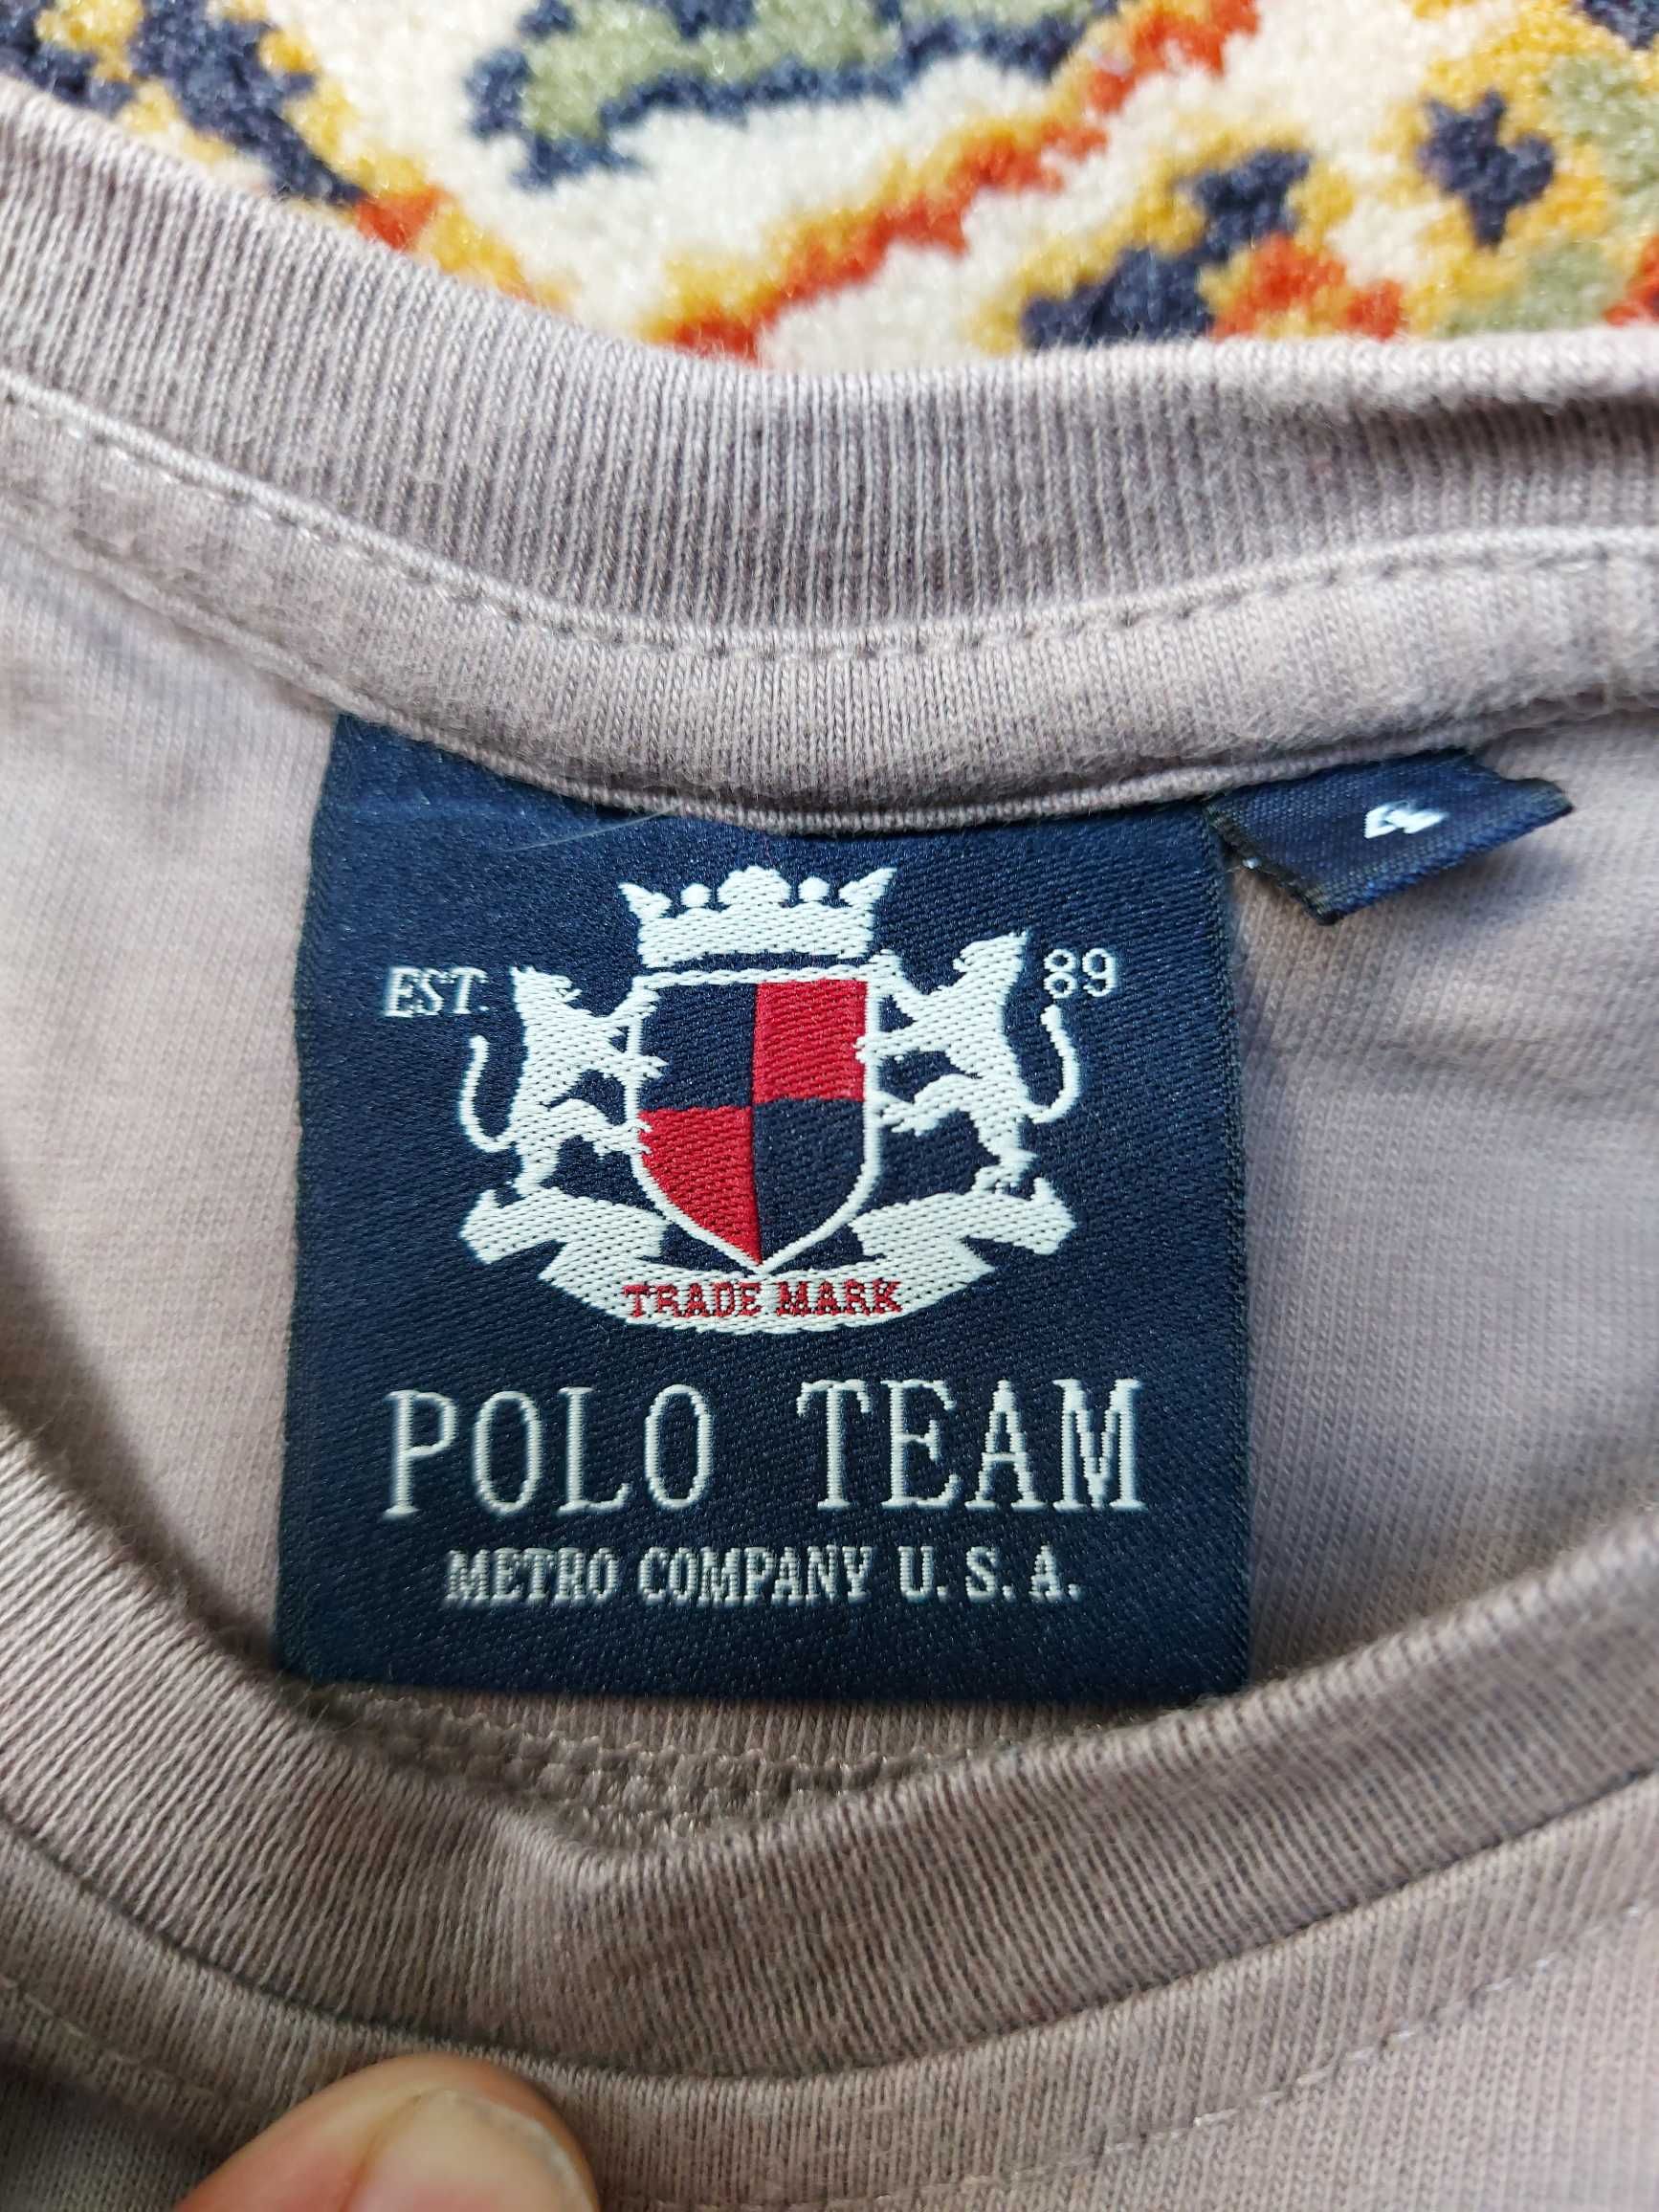 Sweat metro company polo team